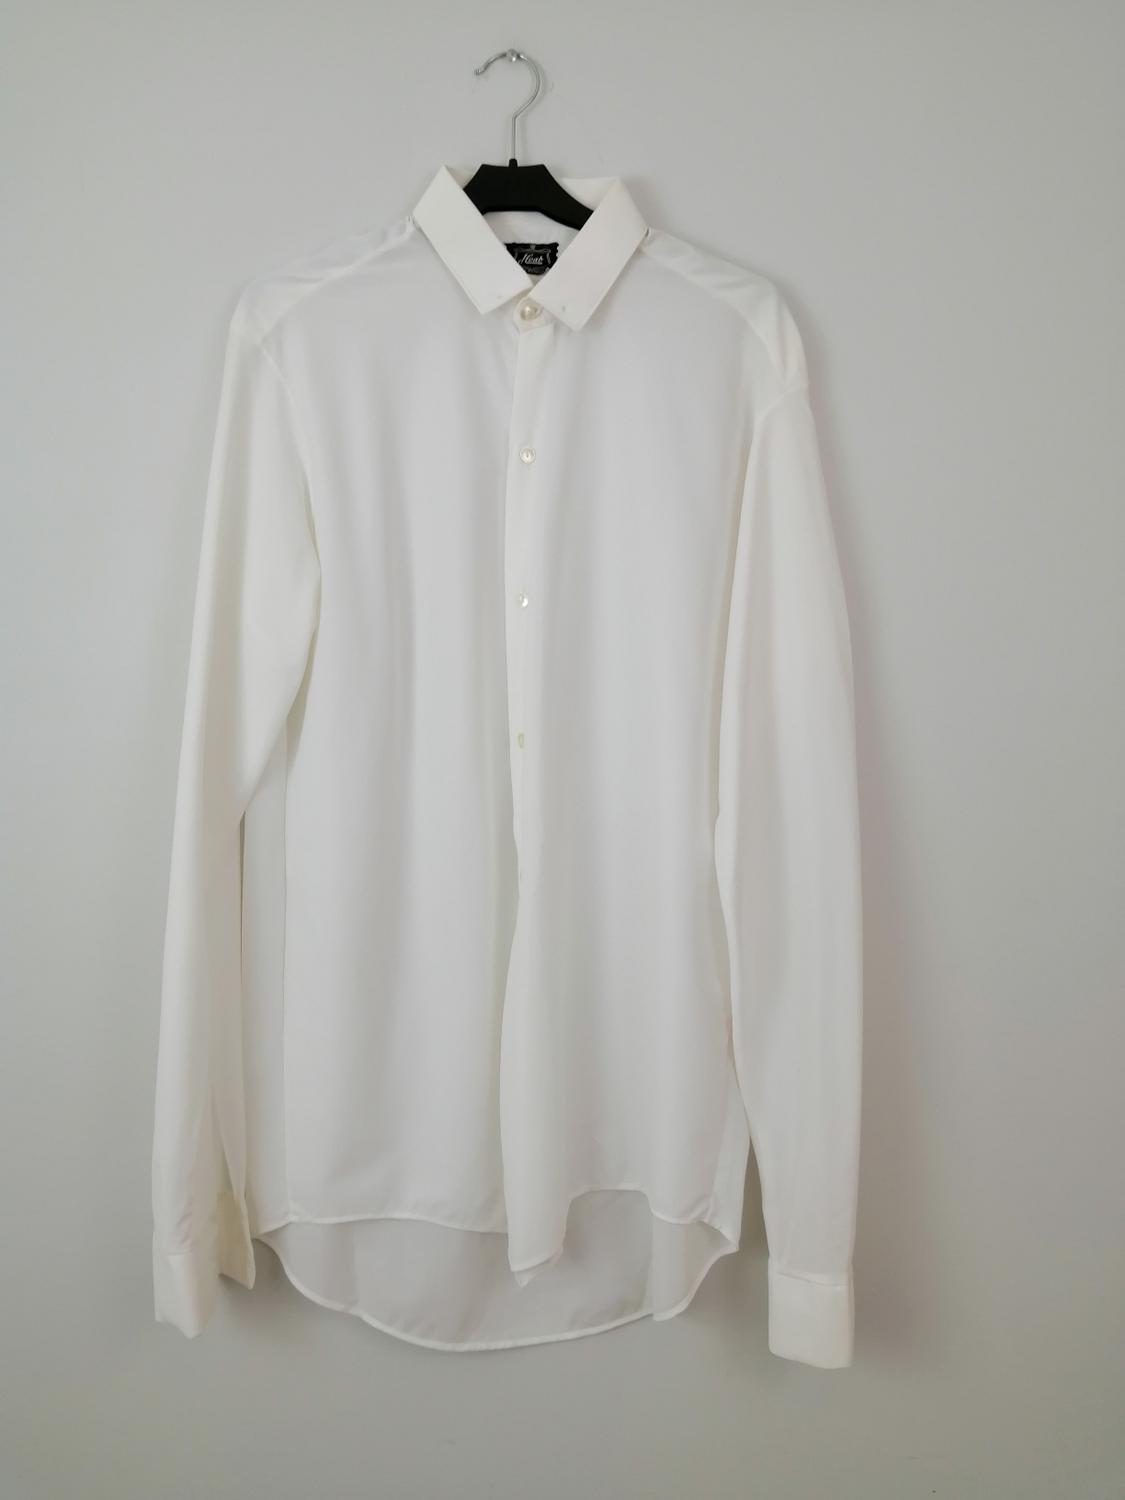 Vintage vit nylonskjorta Heab hål kragen 5060-tal